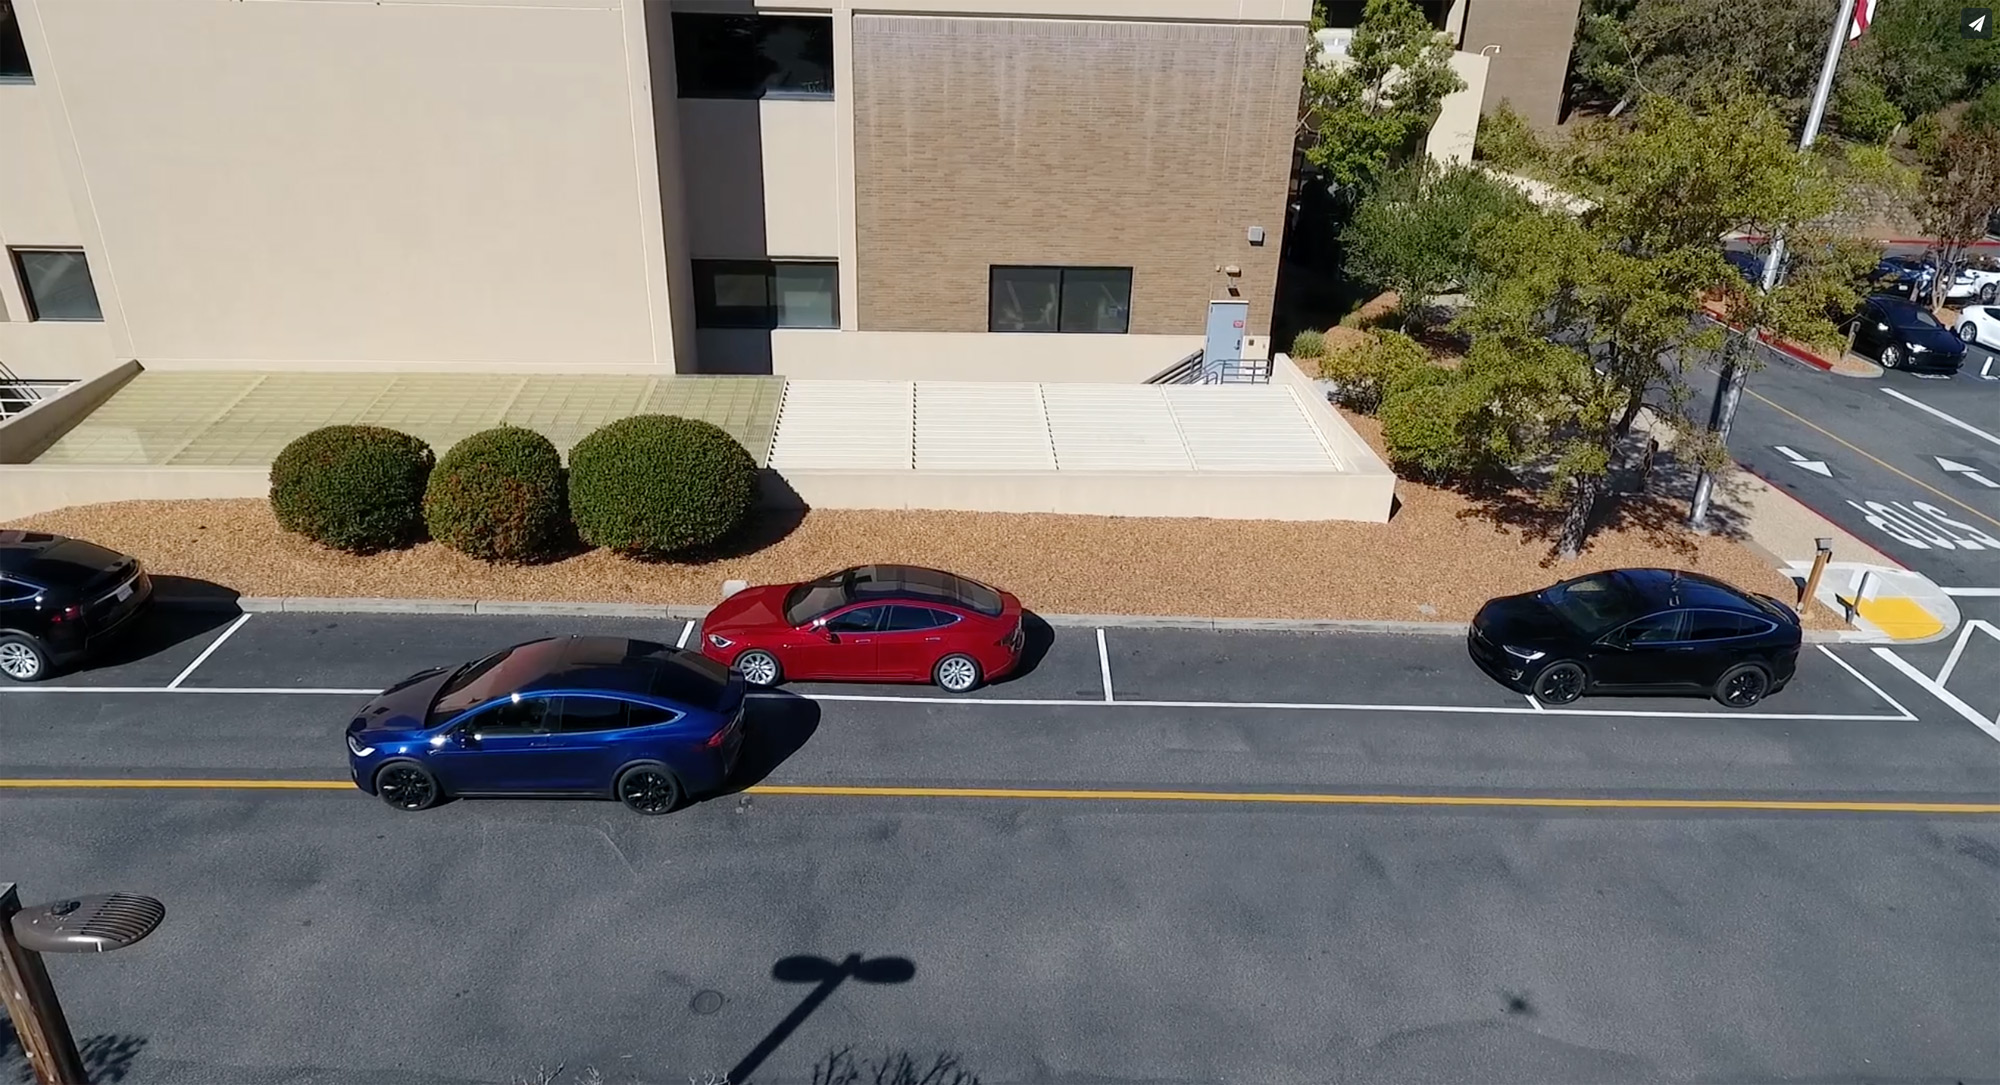 Tesla Model S fully autonomous